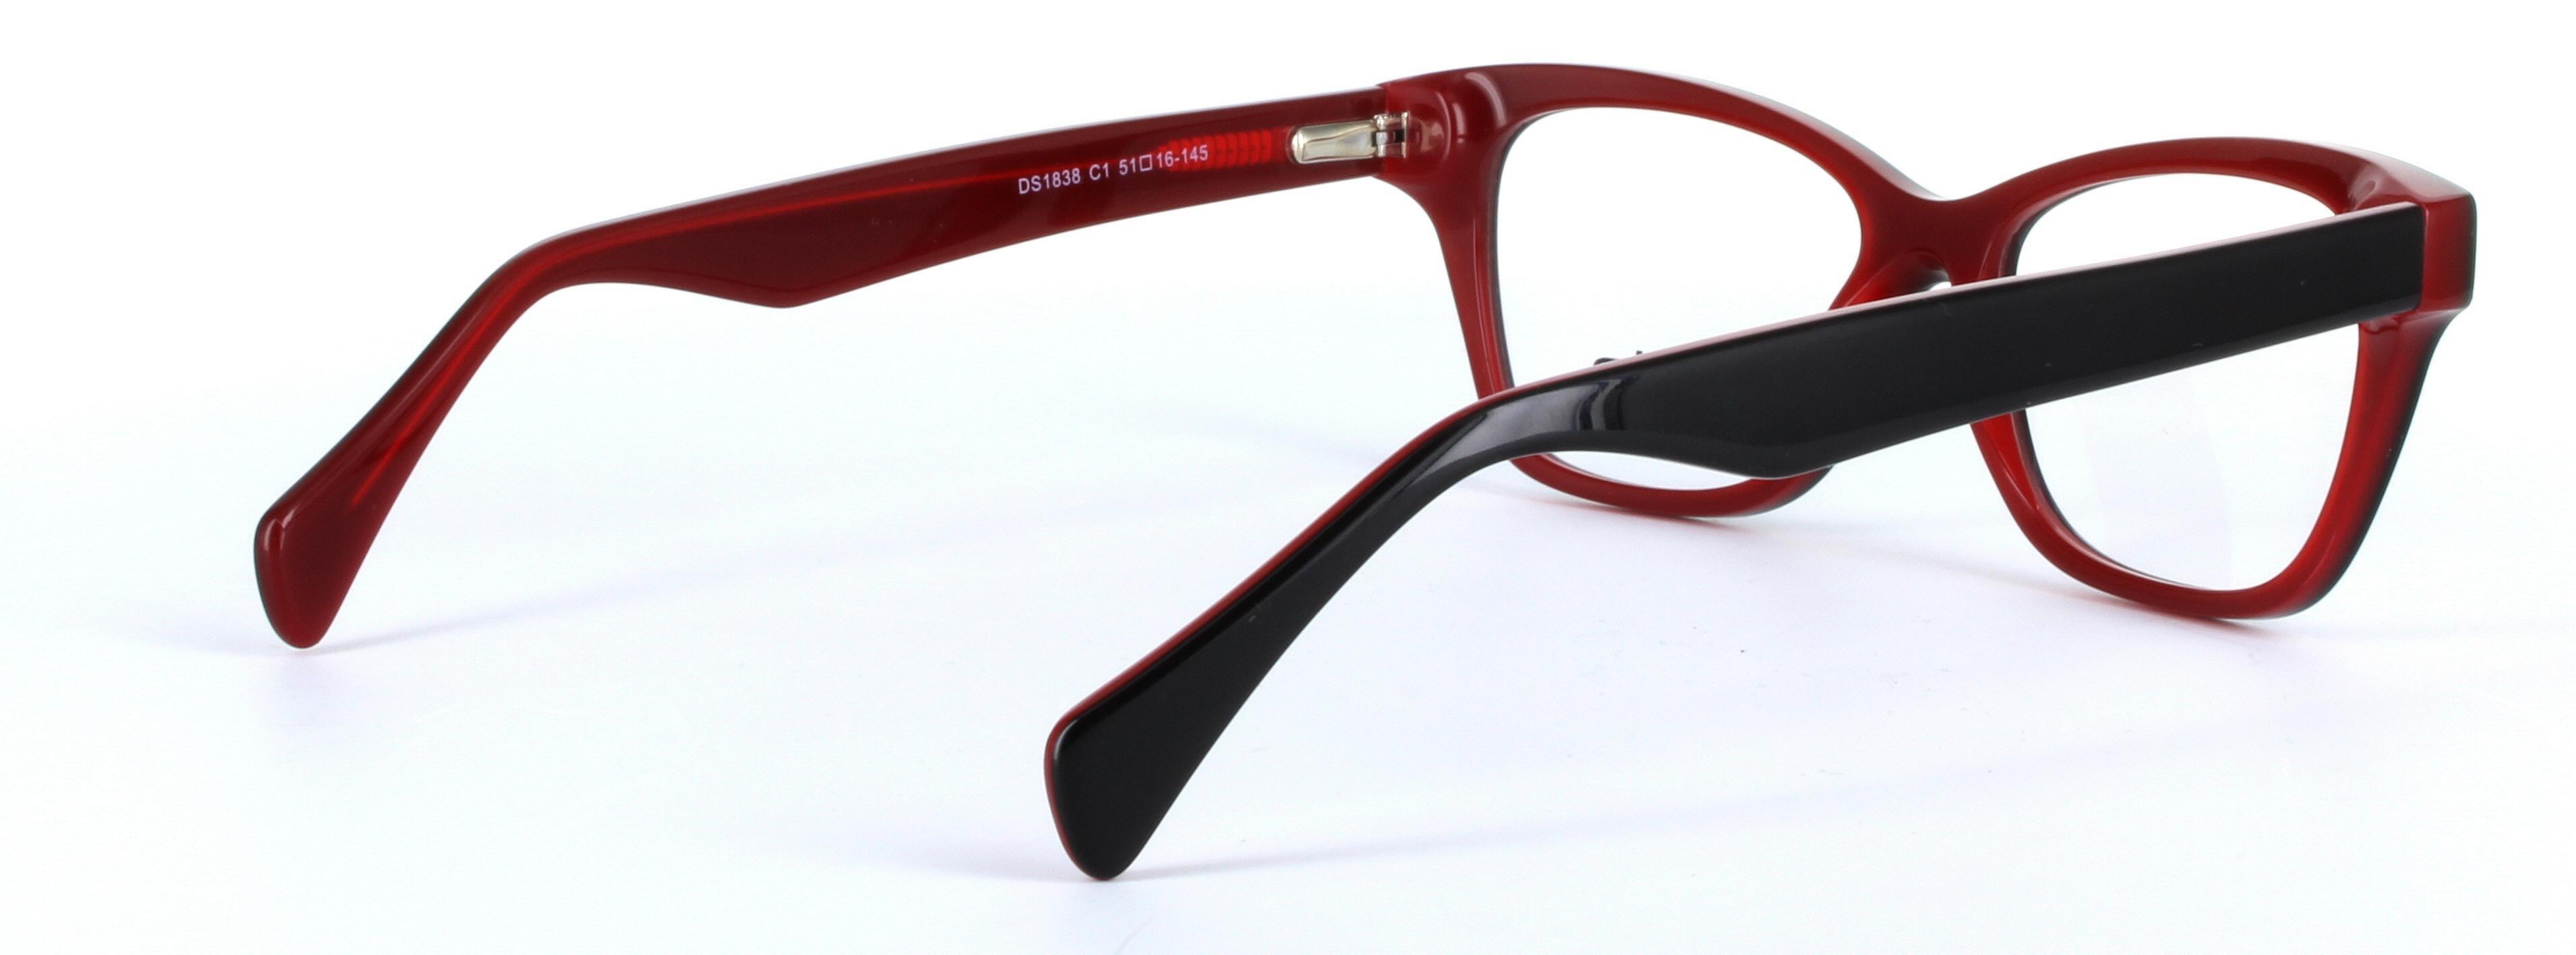 Felia Black Full Rim Oval Round Plastic Glasses - Image View 4